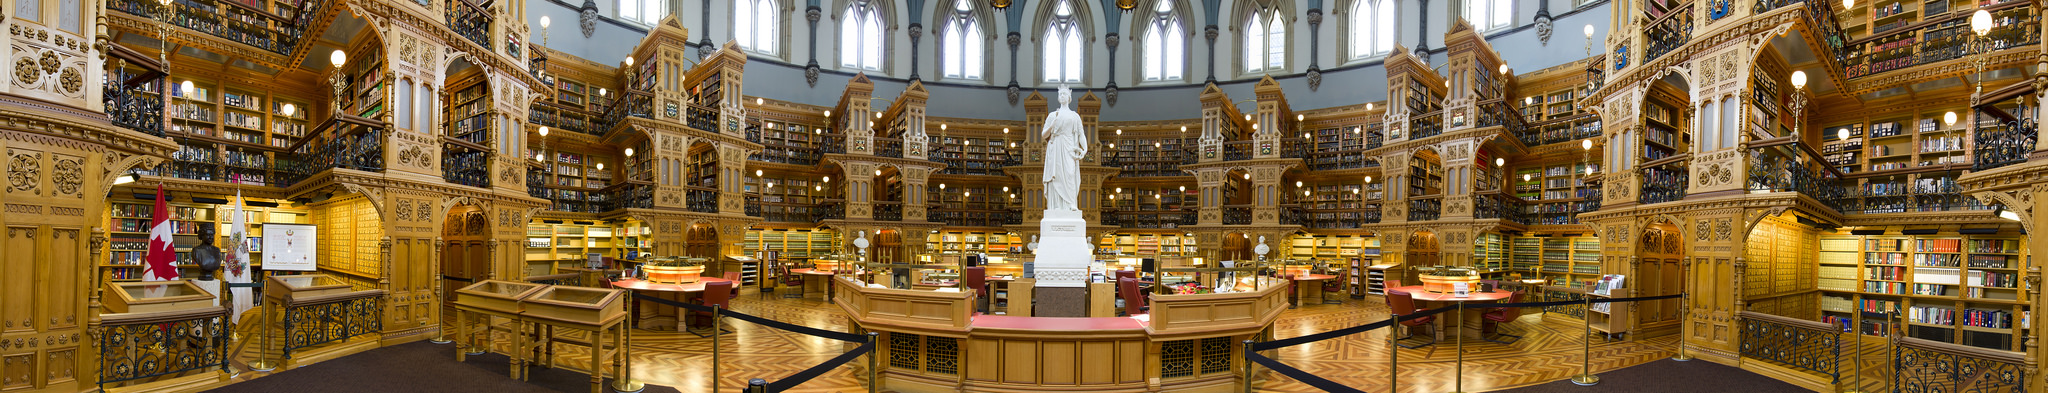 Image agrandie de la statue de la reine Victoria de la Bibliothèque